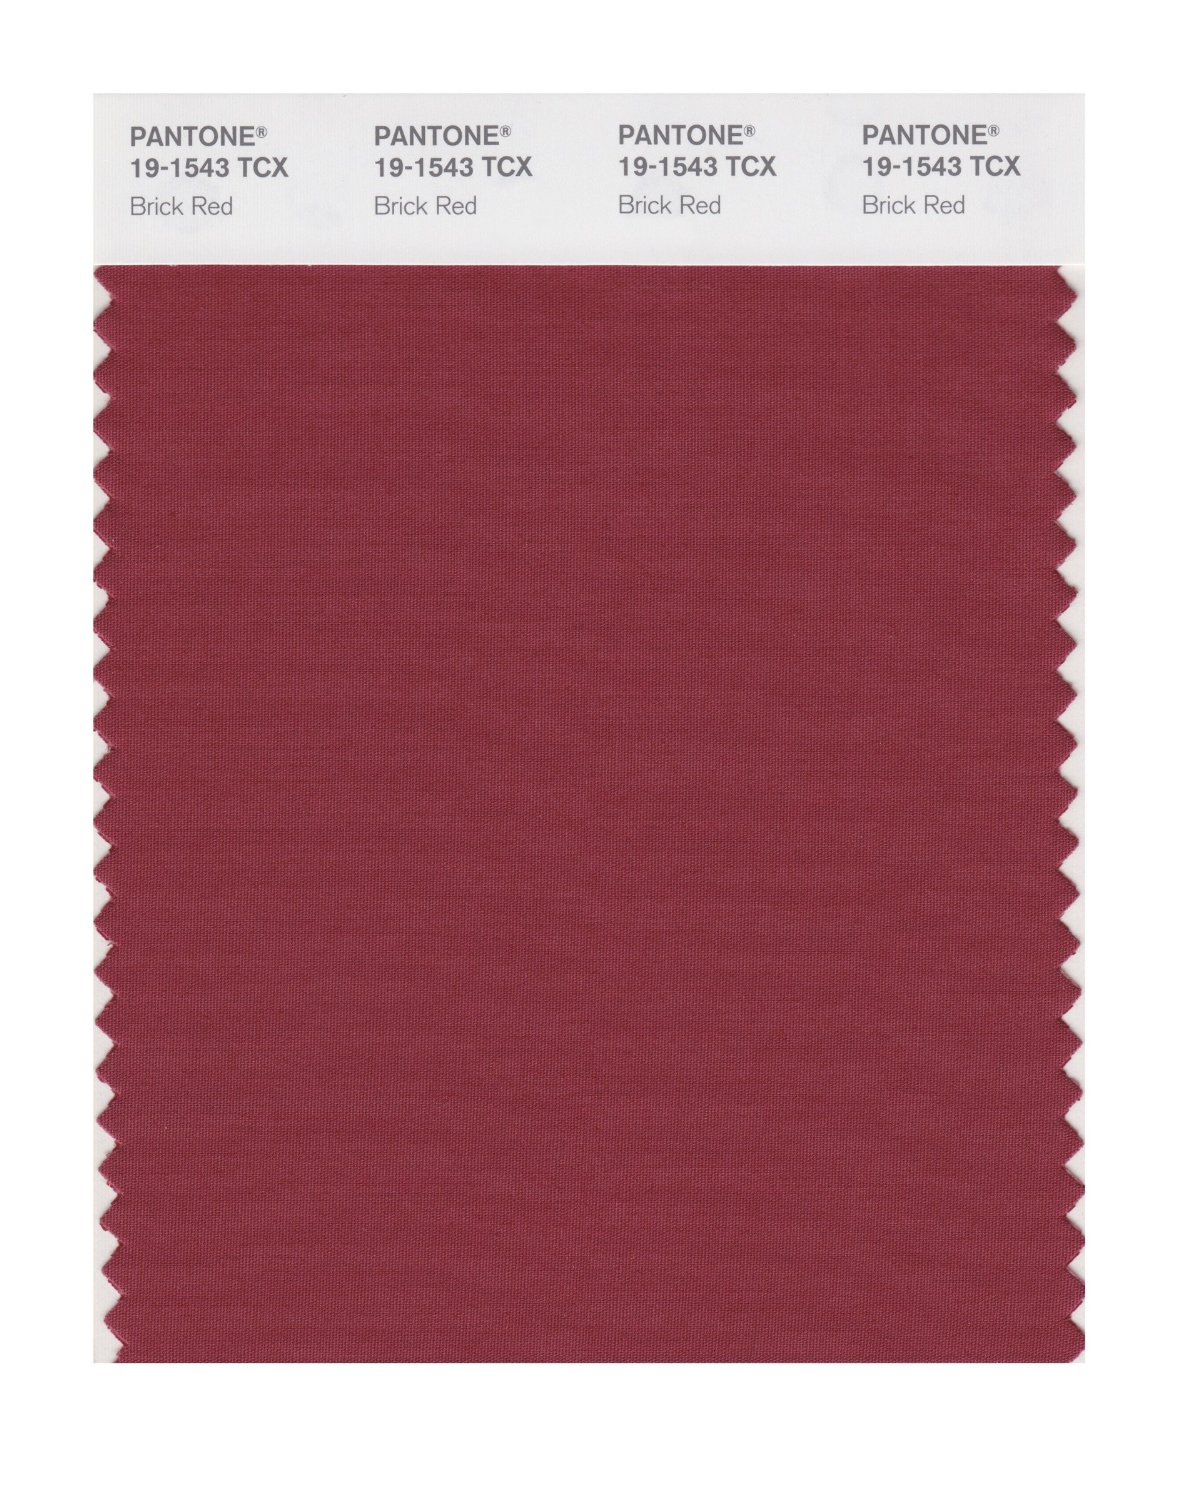 Pantone Cotton Swatch 19-1543 Brick Red